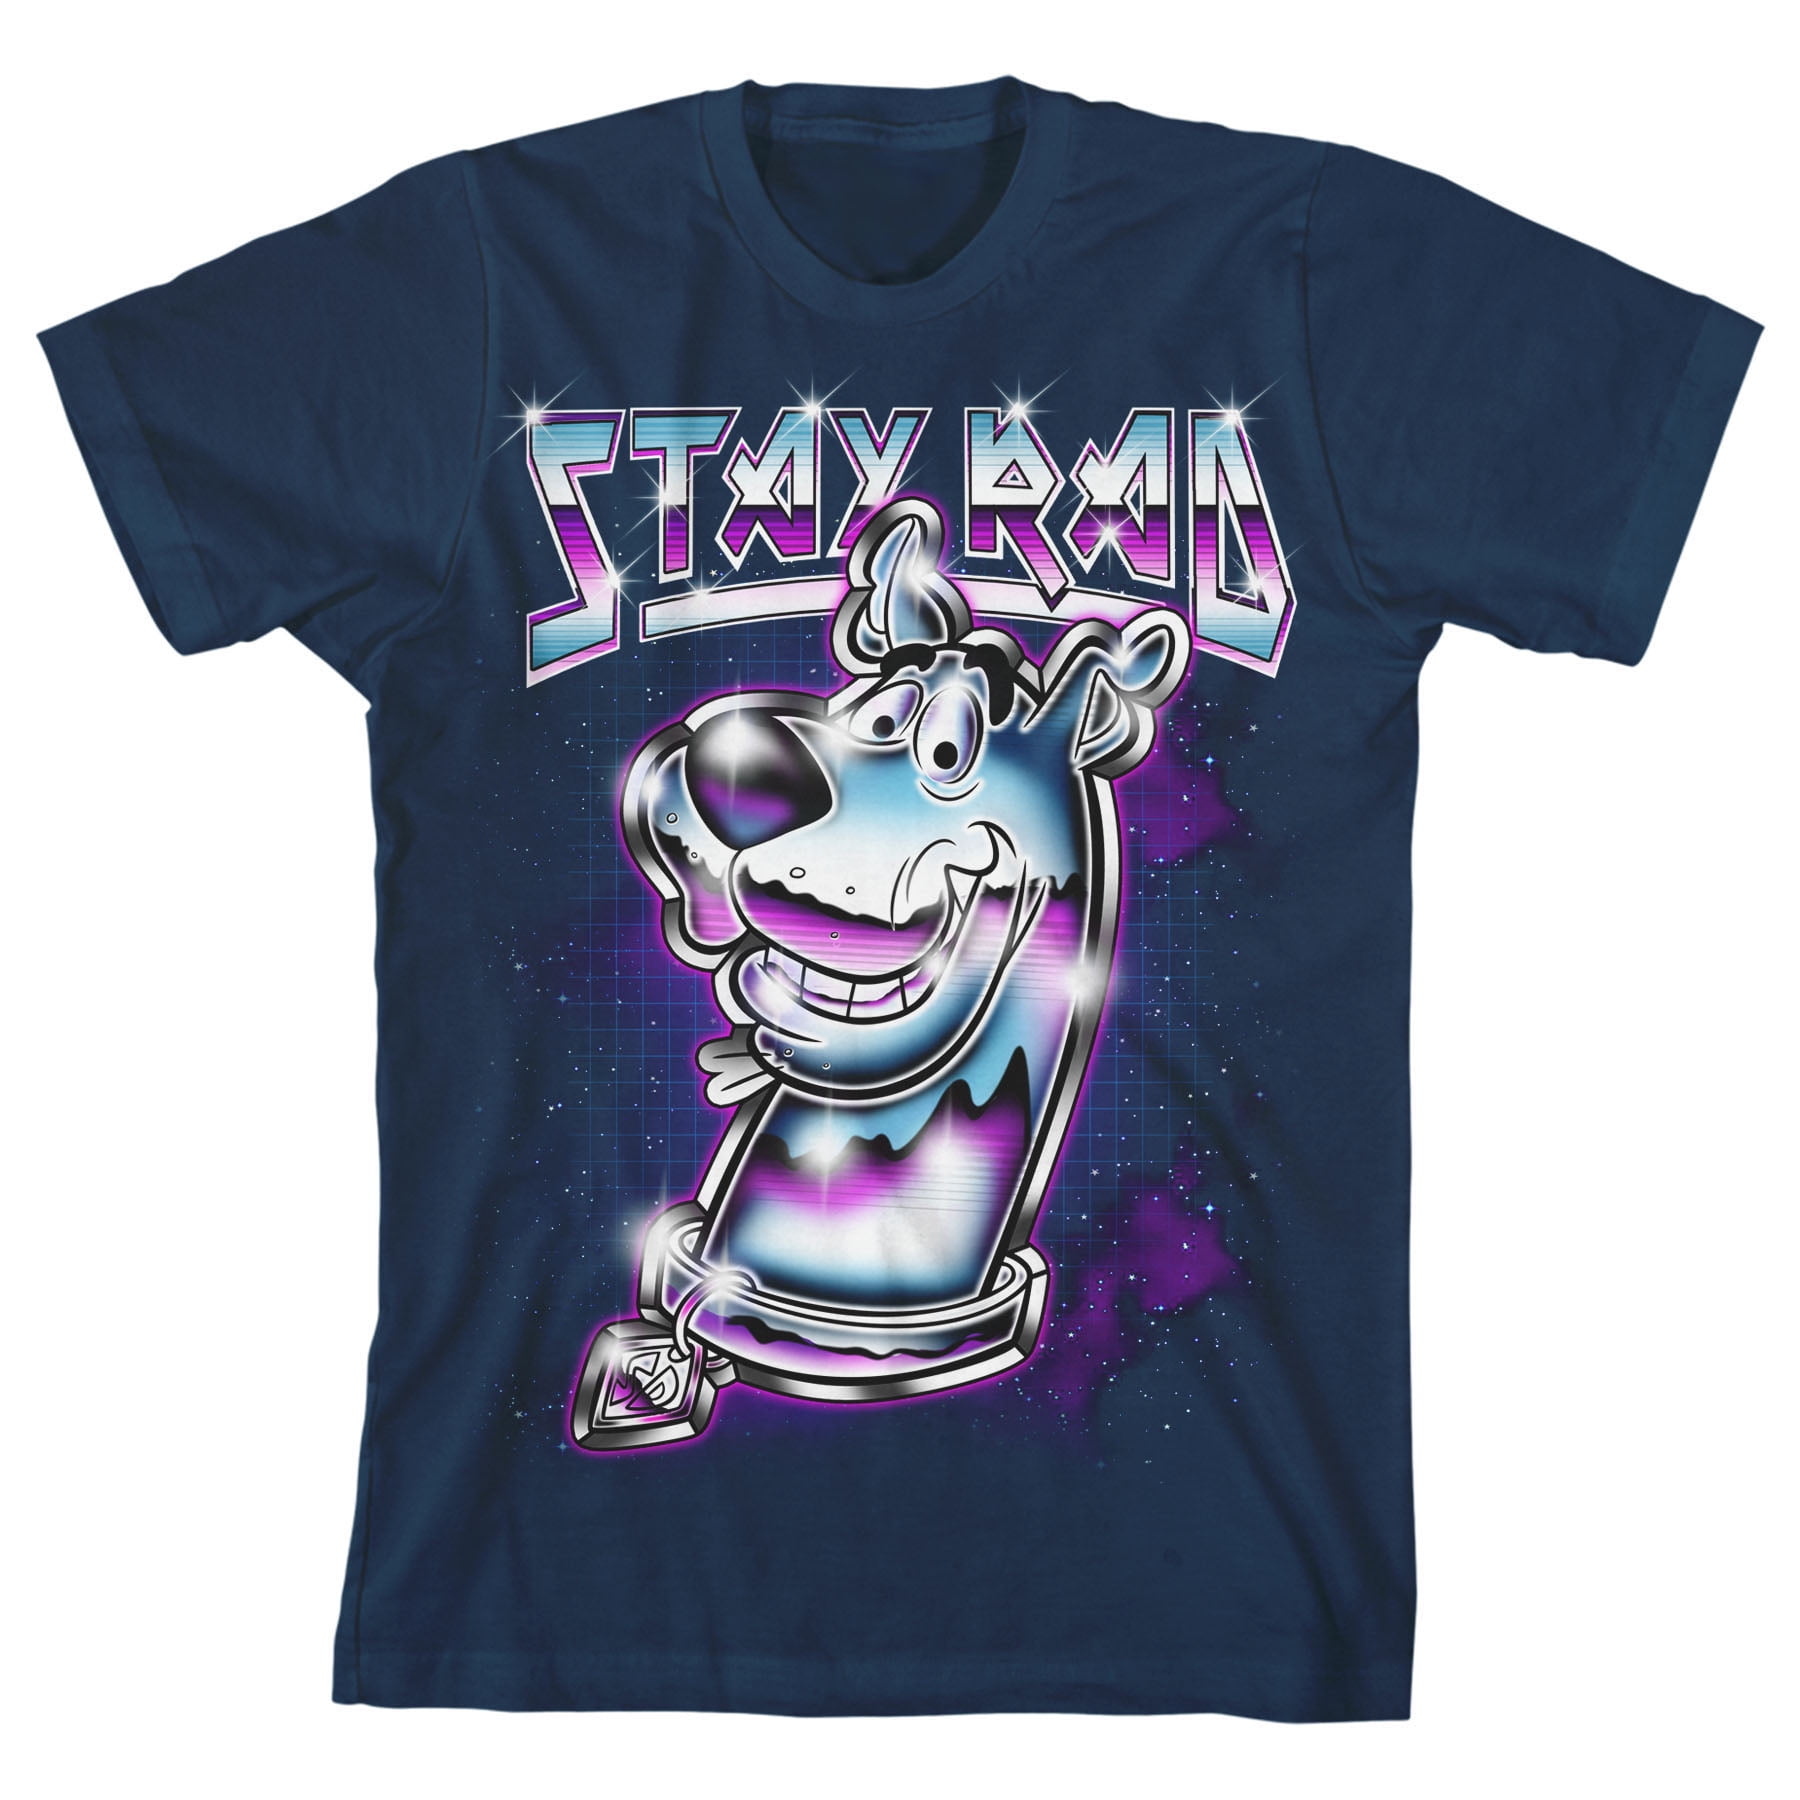 Scooby Doo Stay Bad Chrome Dog Boy's Navy T-shirt-XS